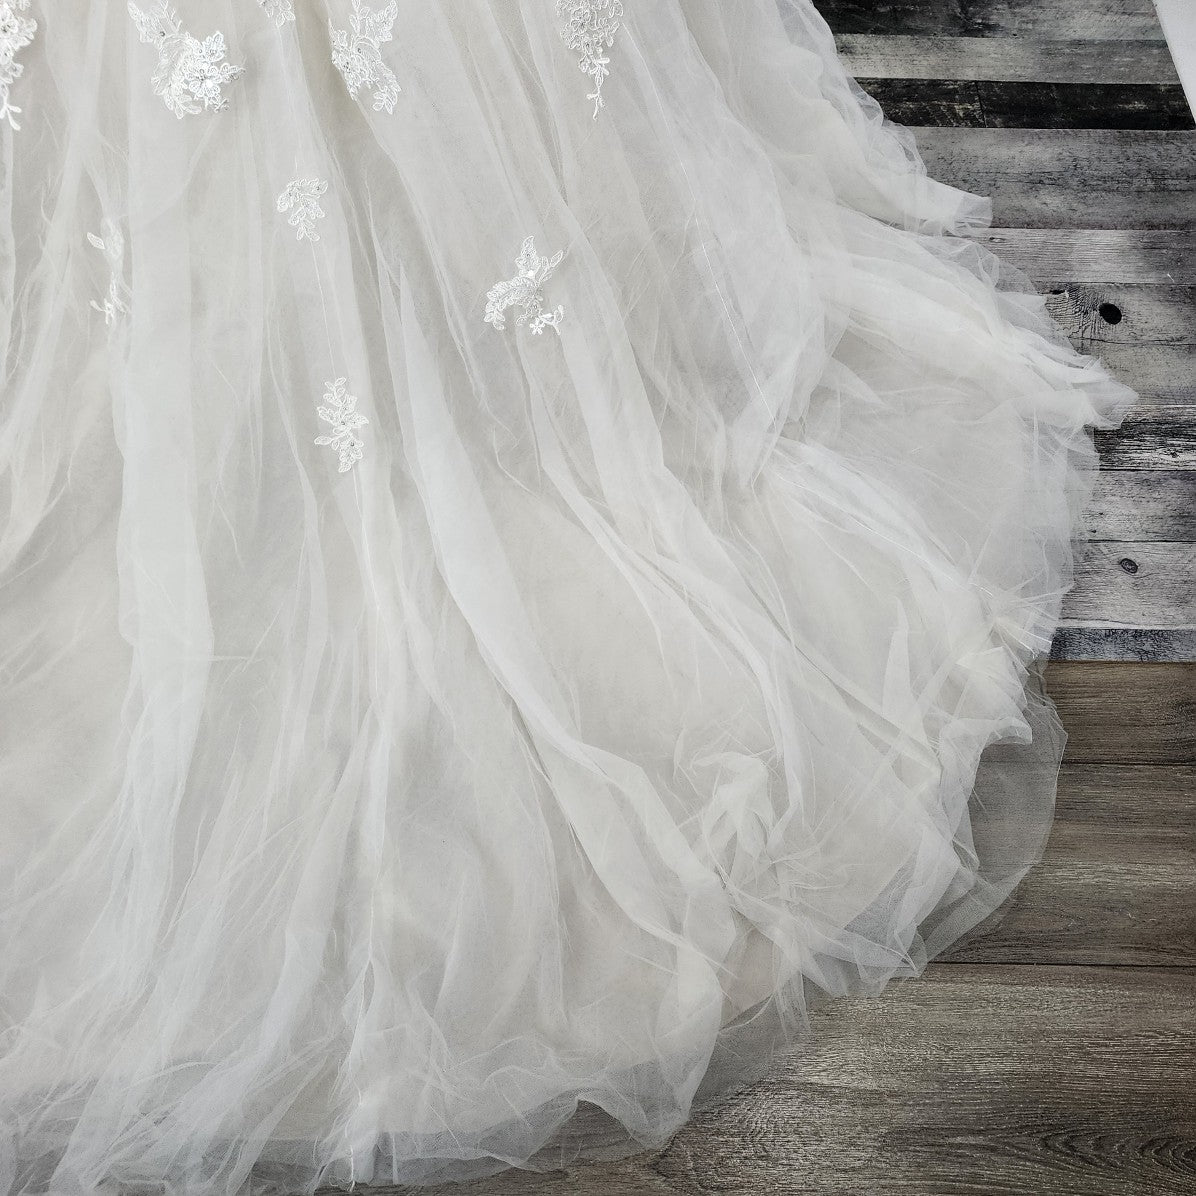 Sophia Tolli White Flower Lace Rhinestone Belt Tule Wedding Gown Size M